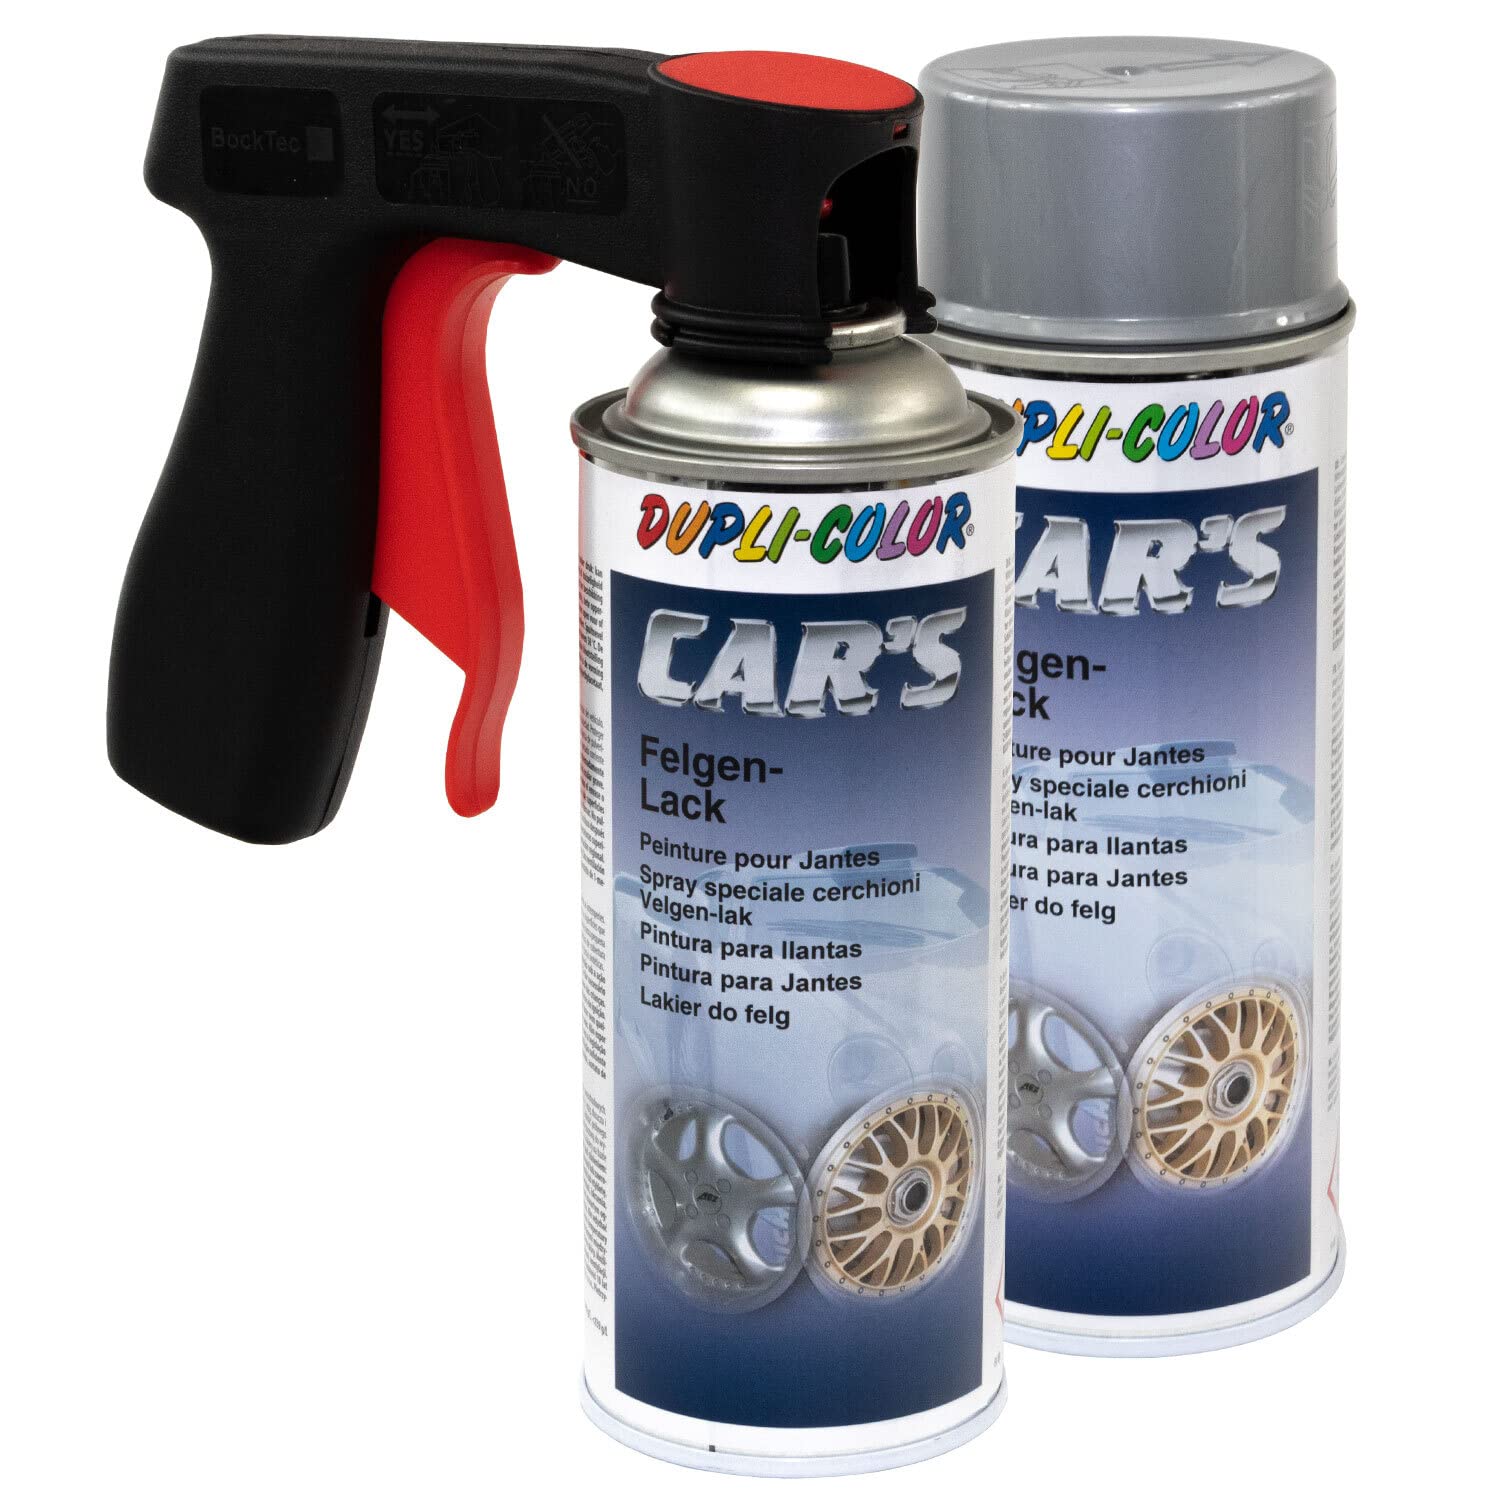 Felgenlack Lack Spray Car's Dupli Color 385919 Silber 2 X 400 ml mit Pistolengriff von DUPLI_bundle